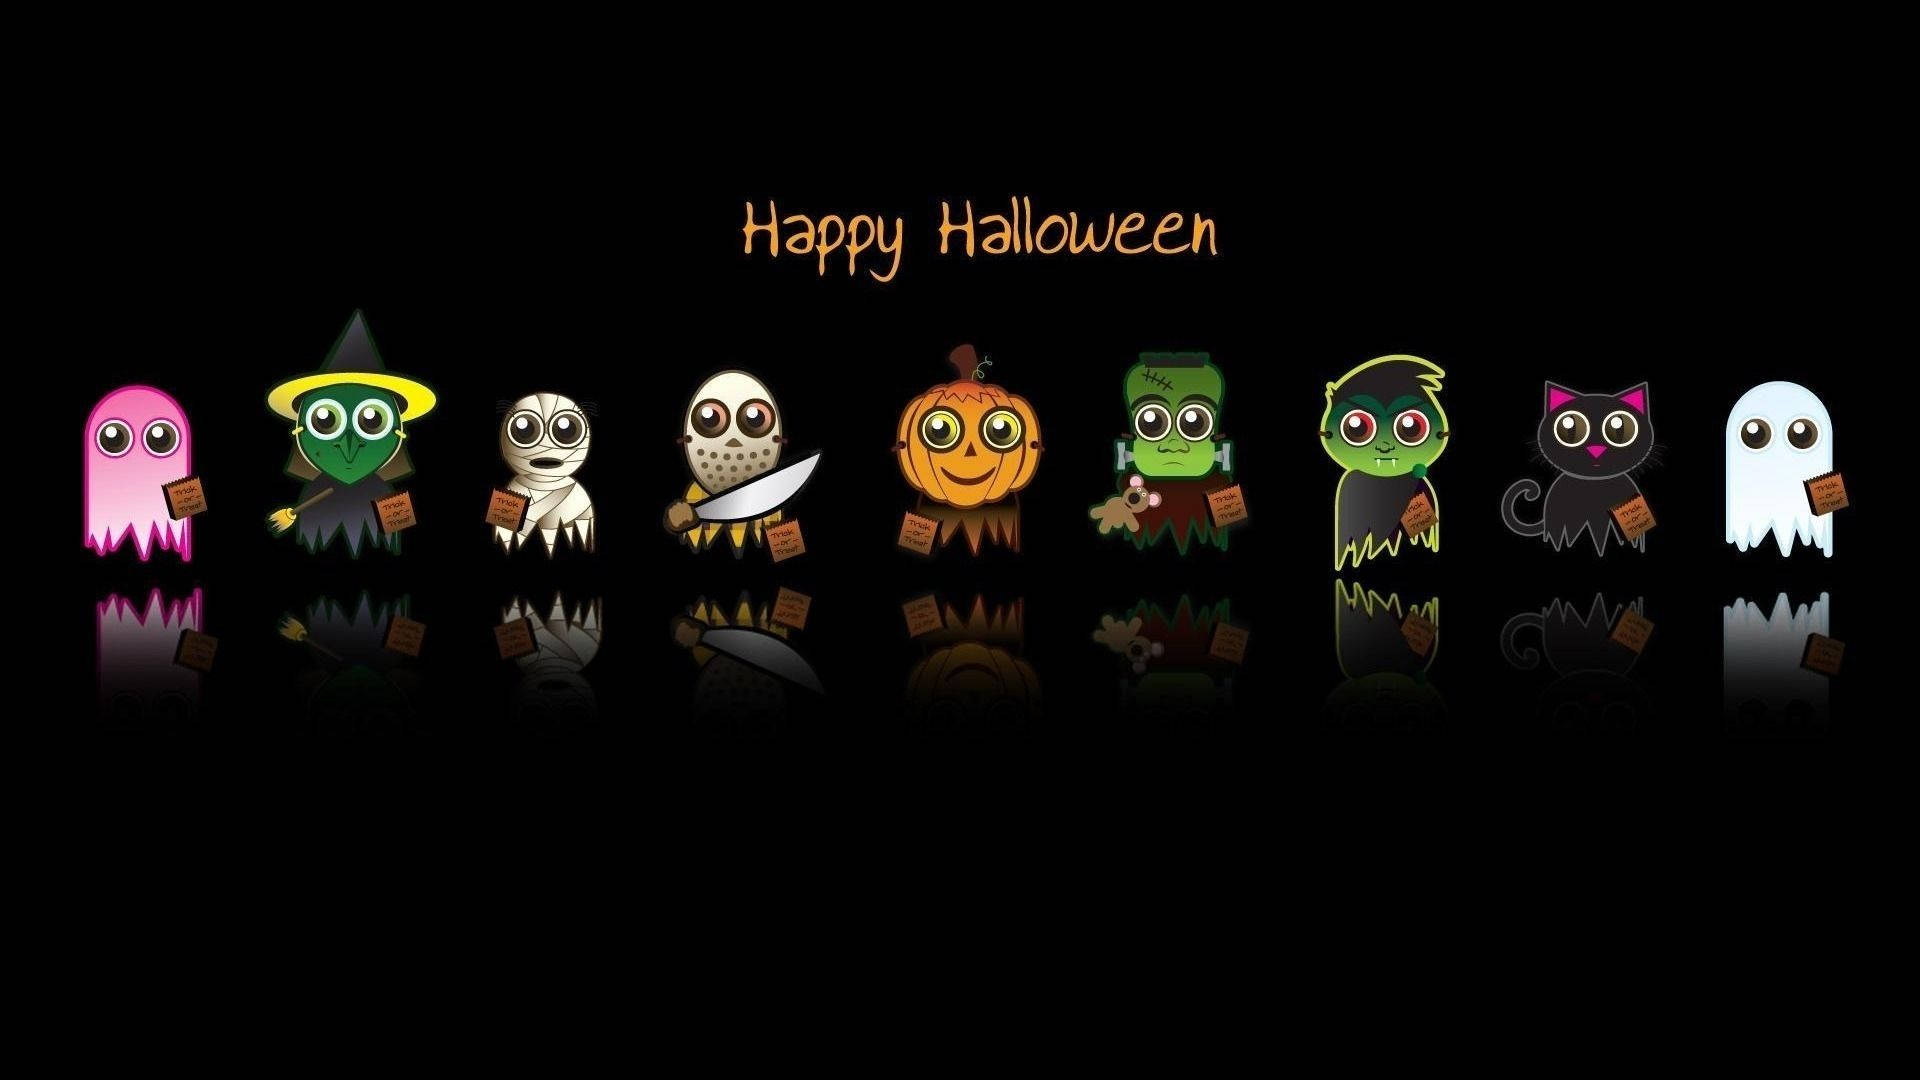 Cartoon Halloween Characters In The Dark